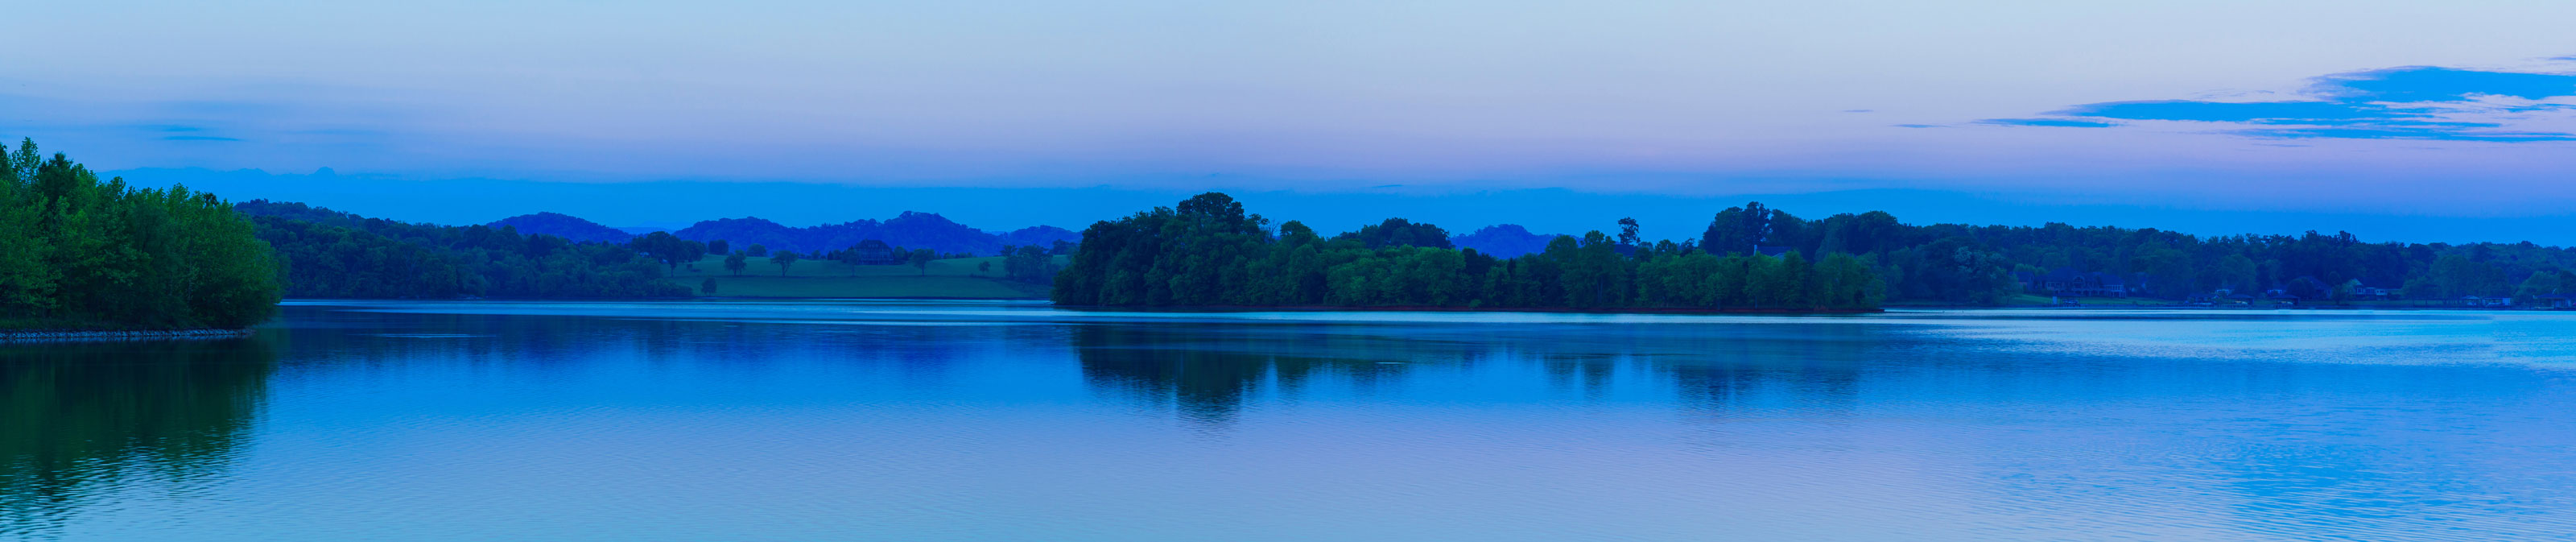 Tennessee lake blue